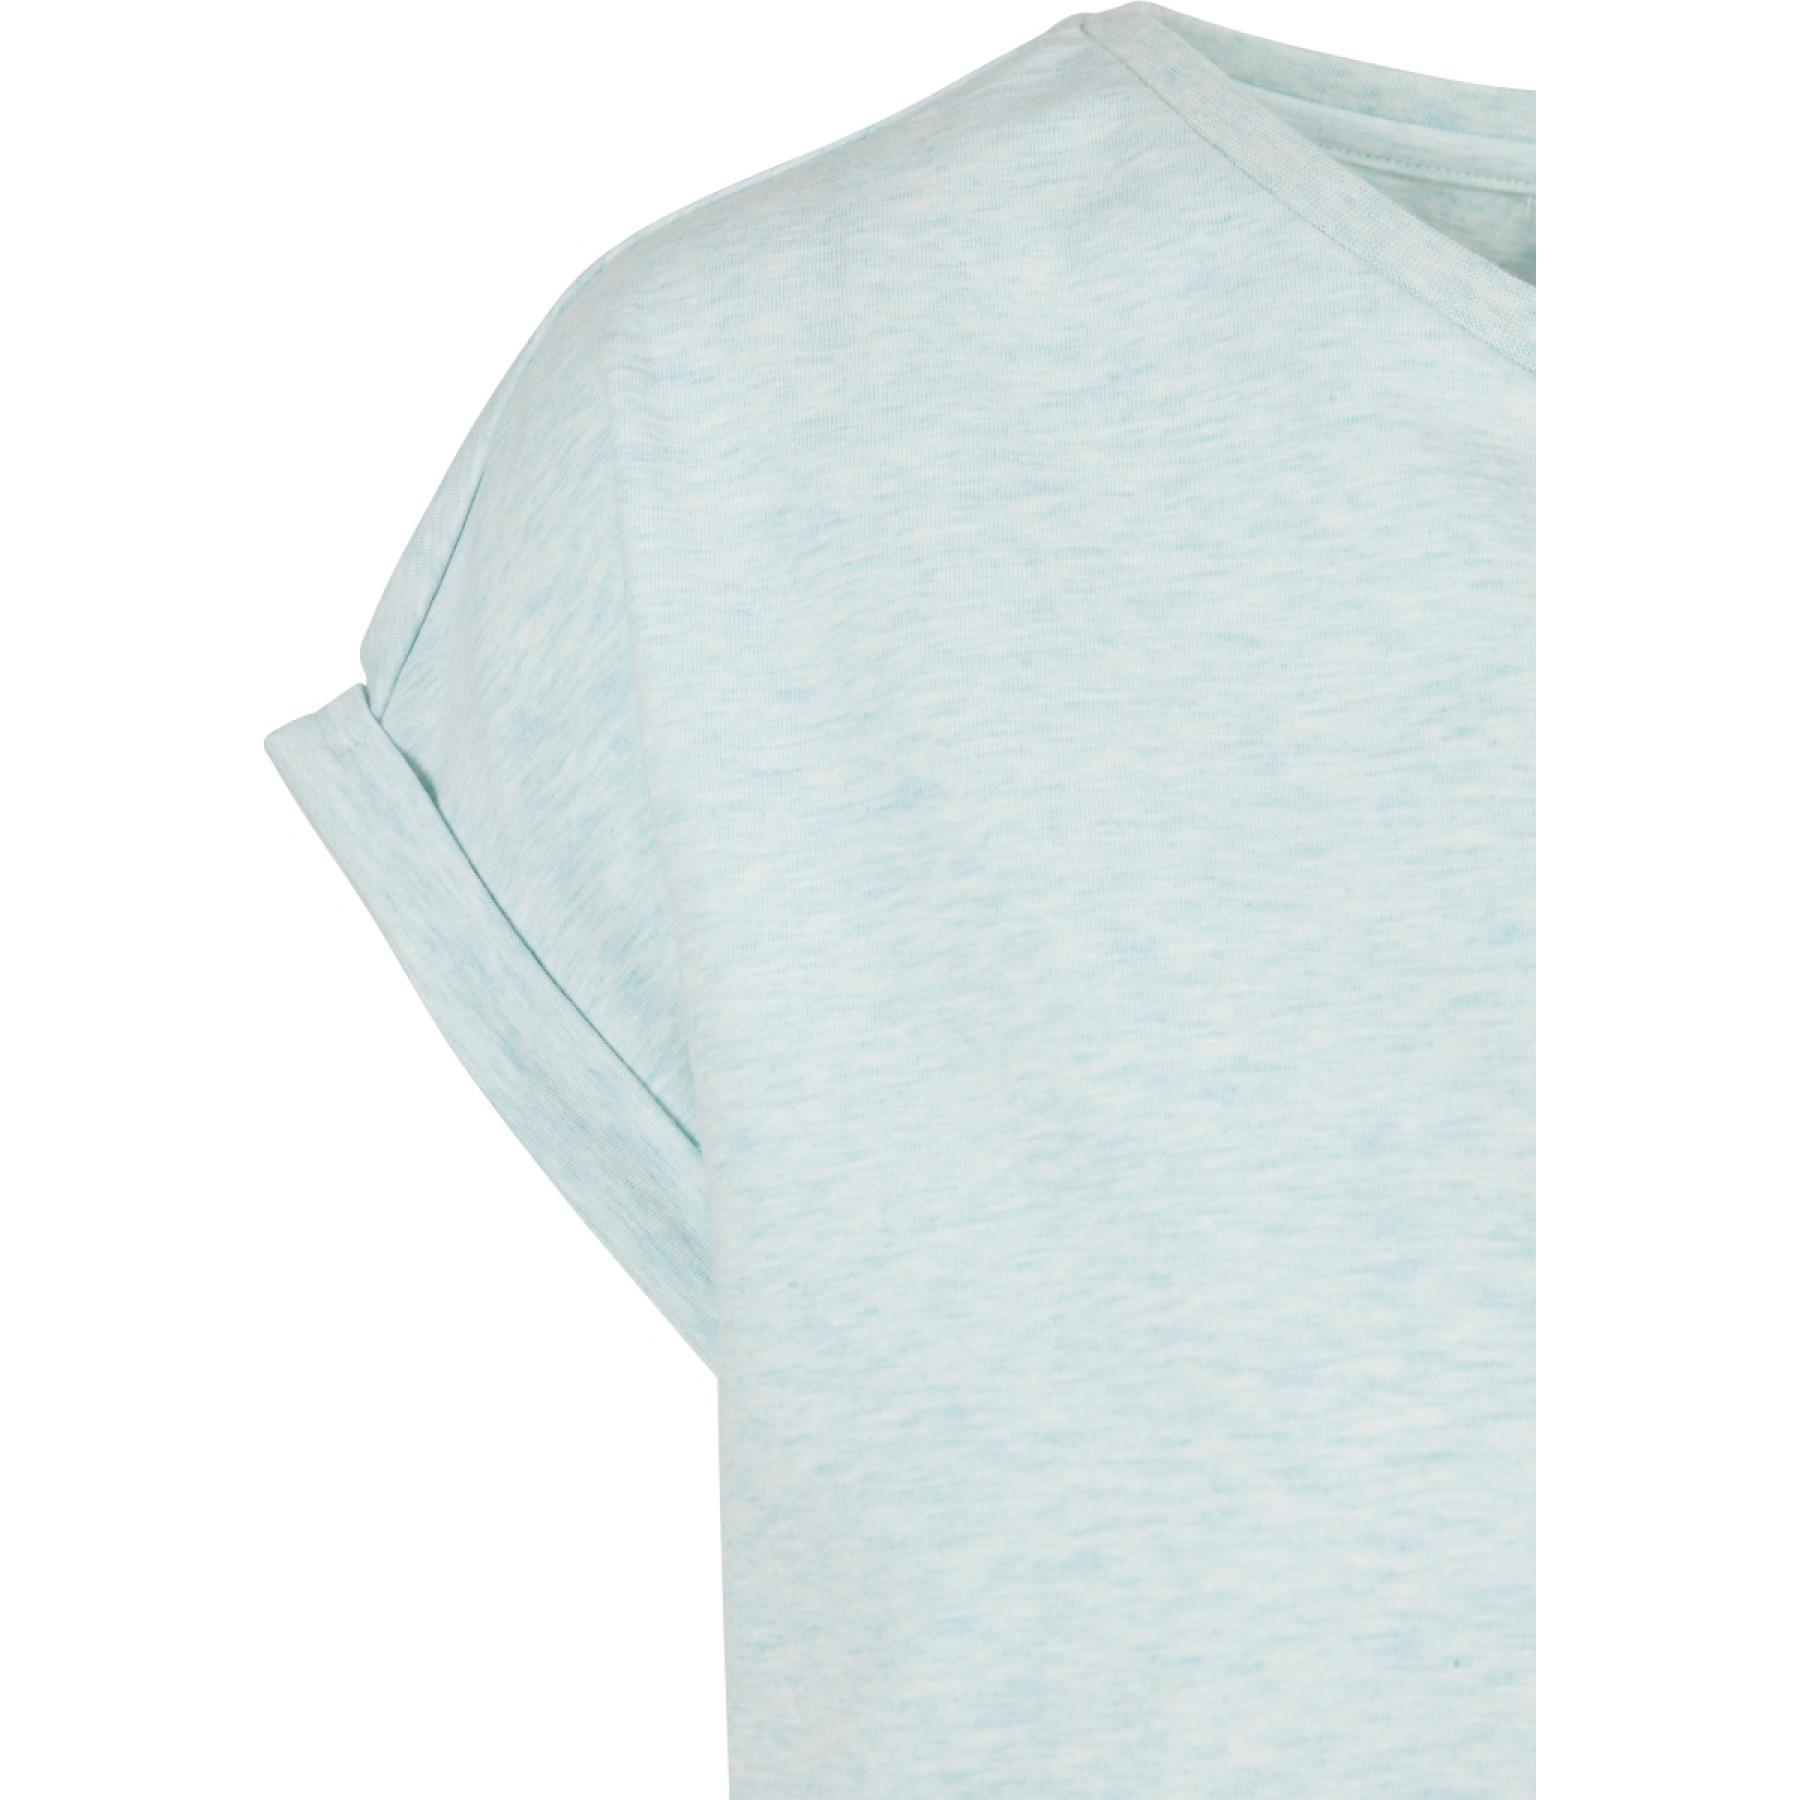 T-shirt för kvinnor Urban Classics color melange extended shoulder-grandes tailles